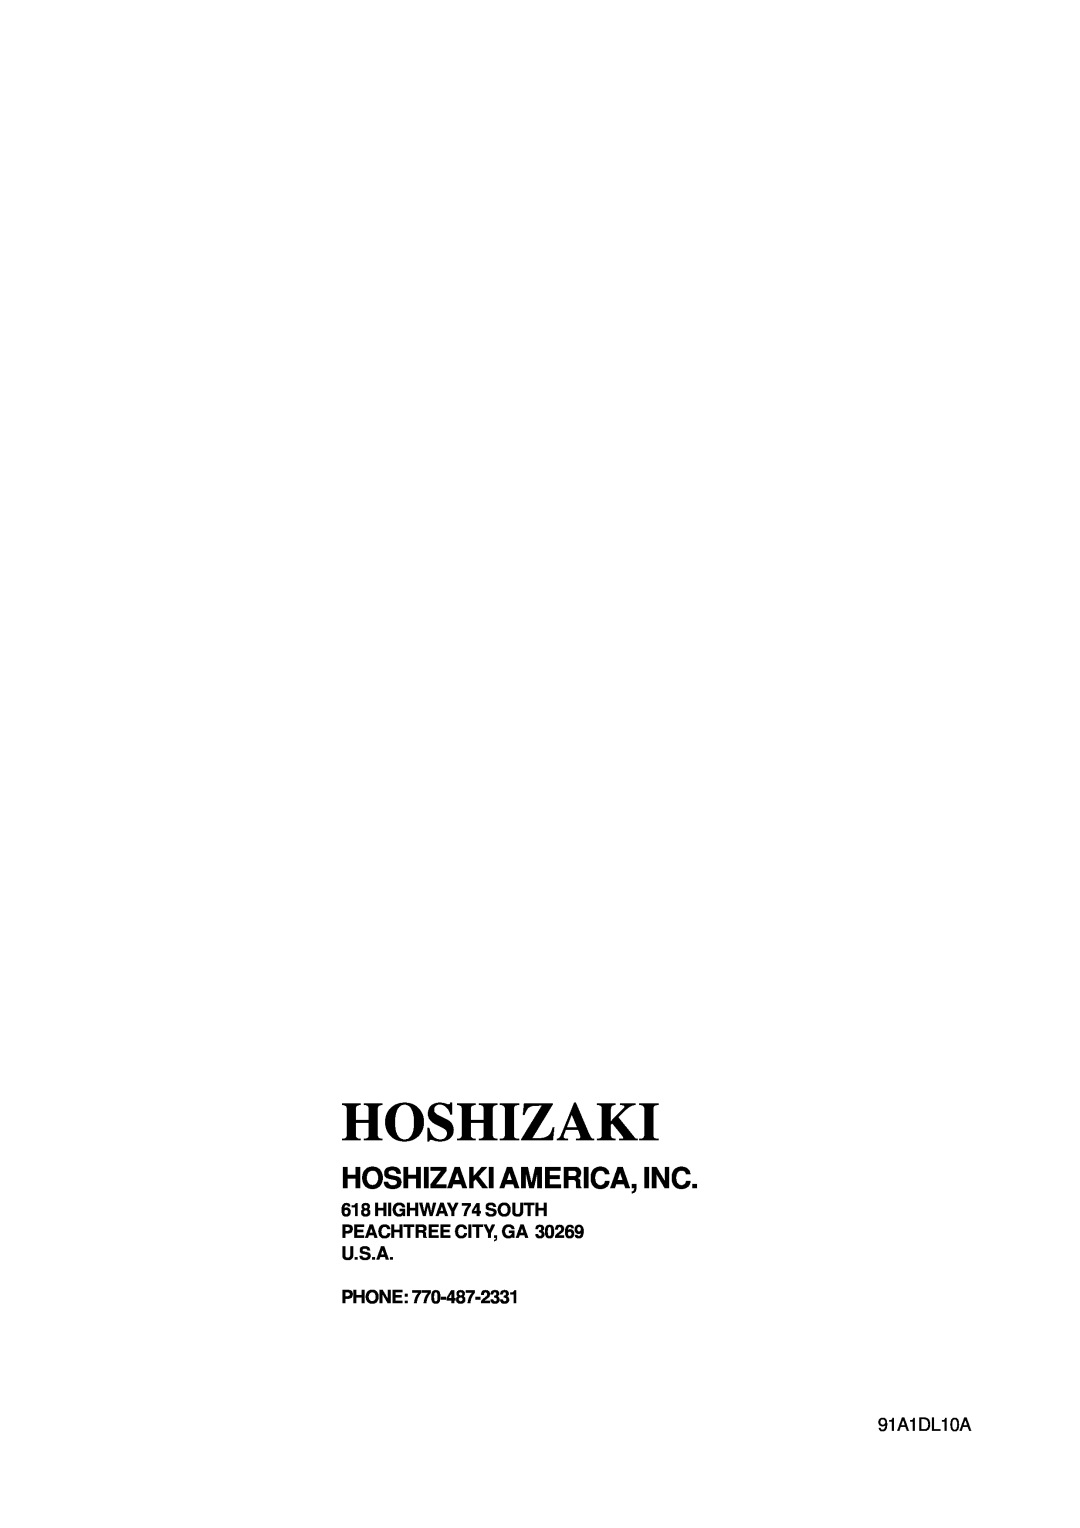 Hoshizaki KM-1300NRF instruction manual Hoshizaki America, Inc, 91A1DL10A 